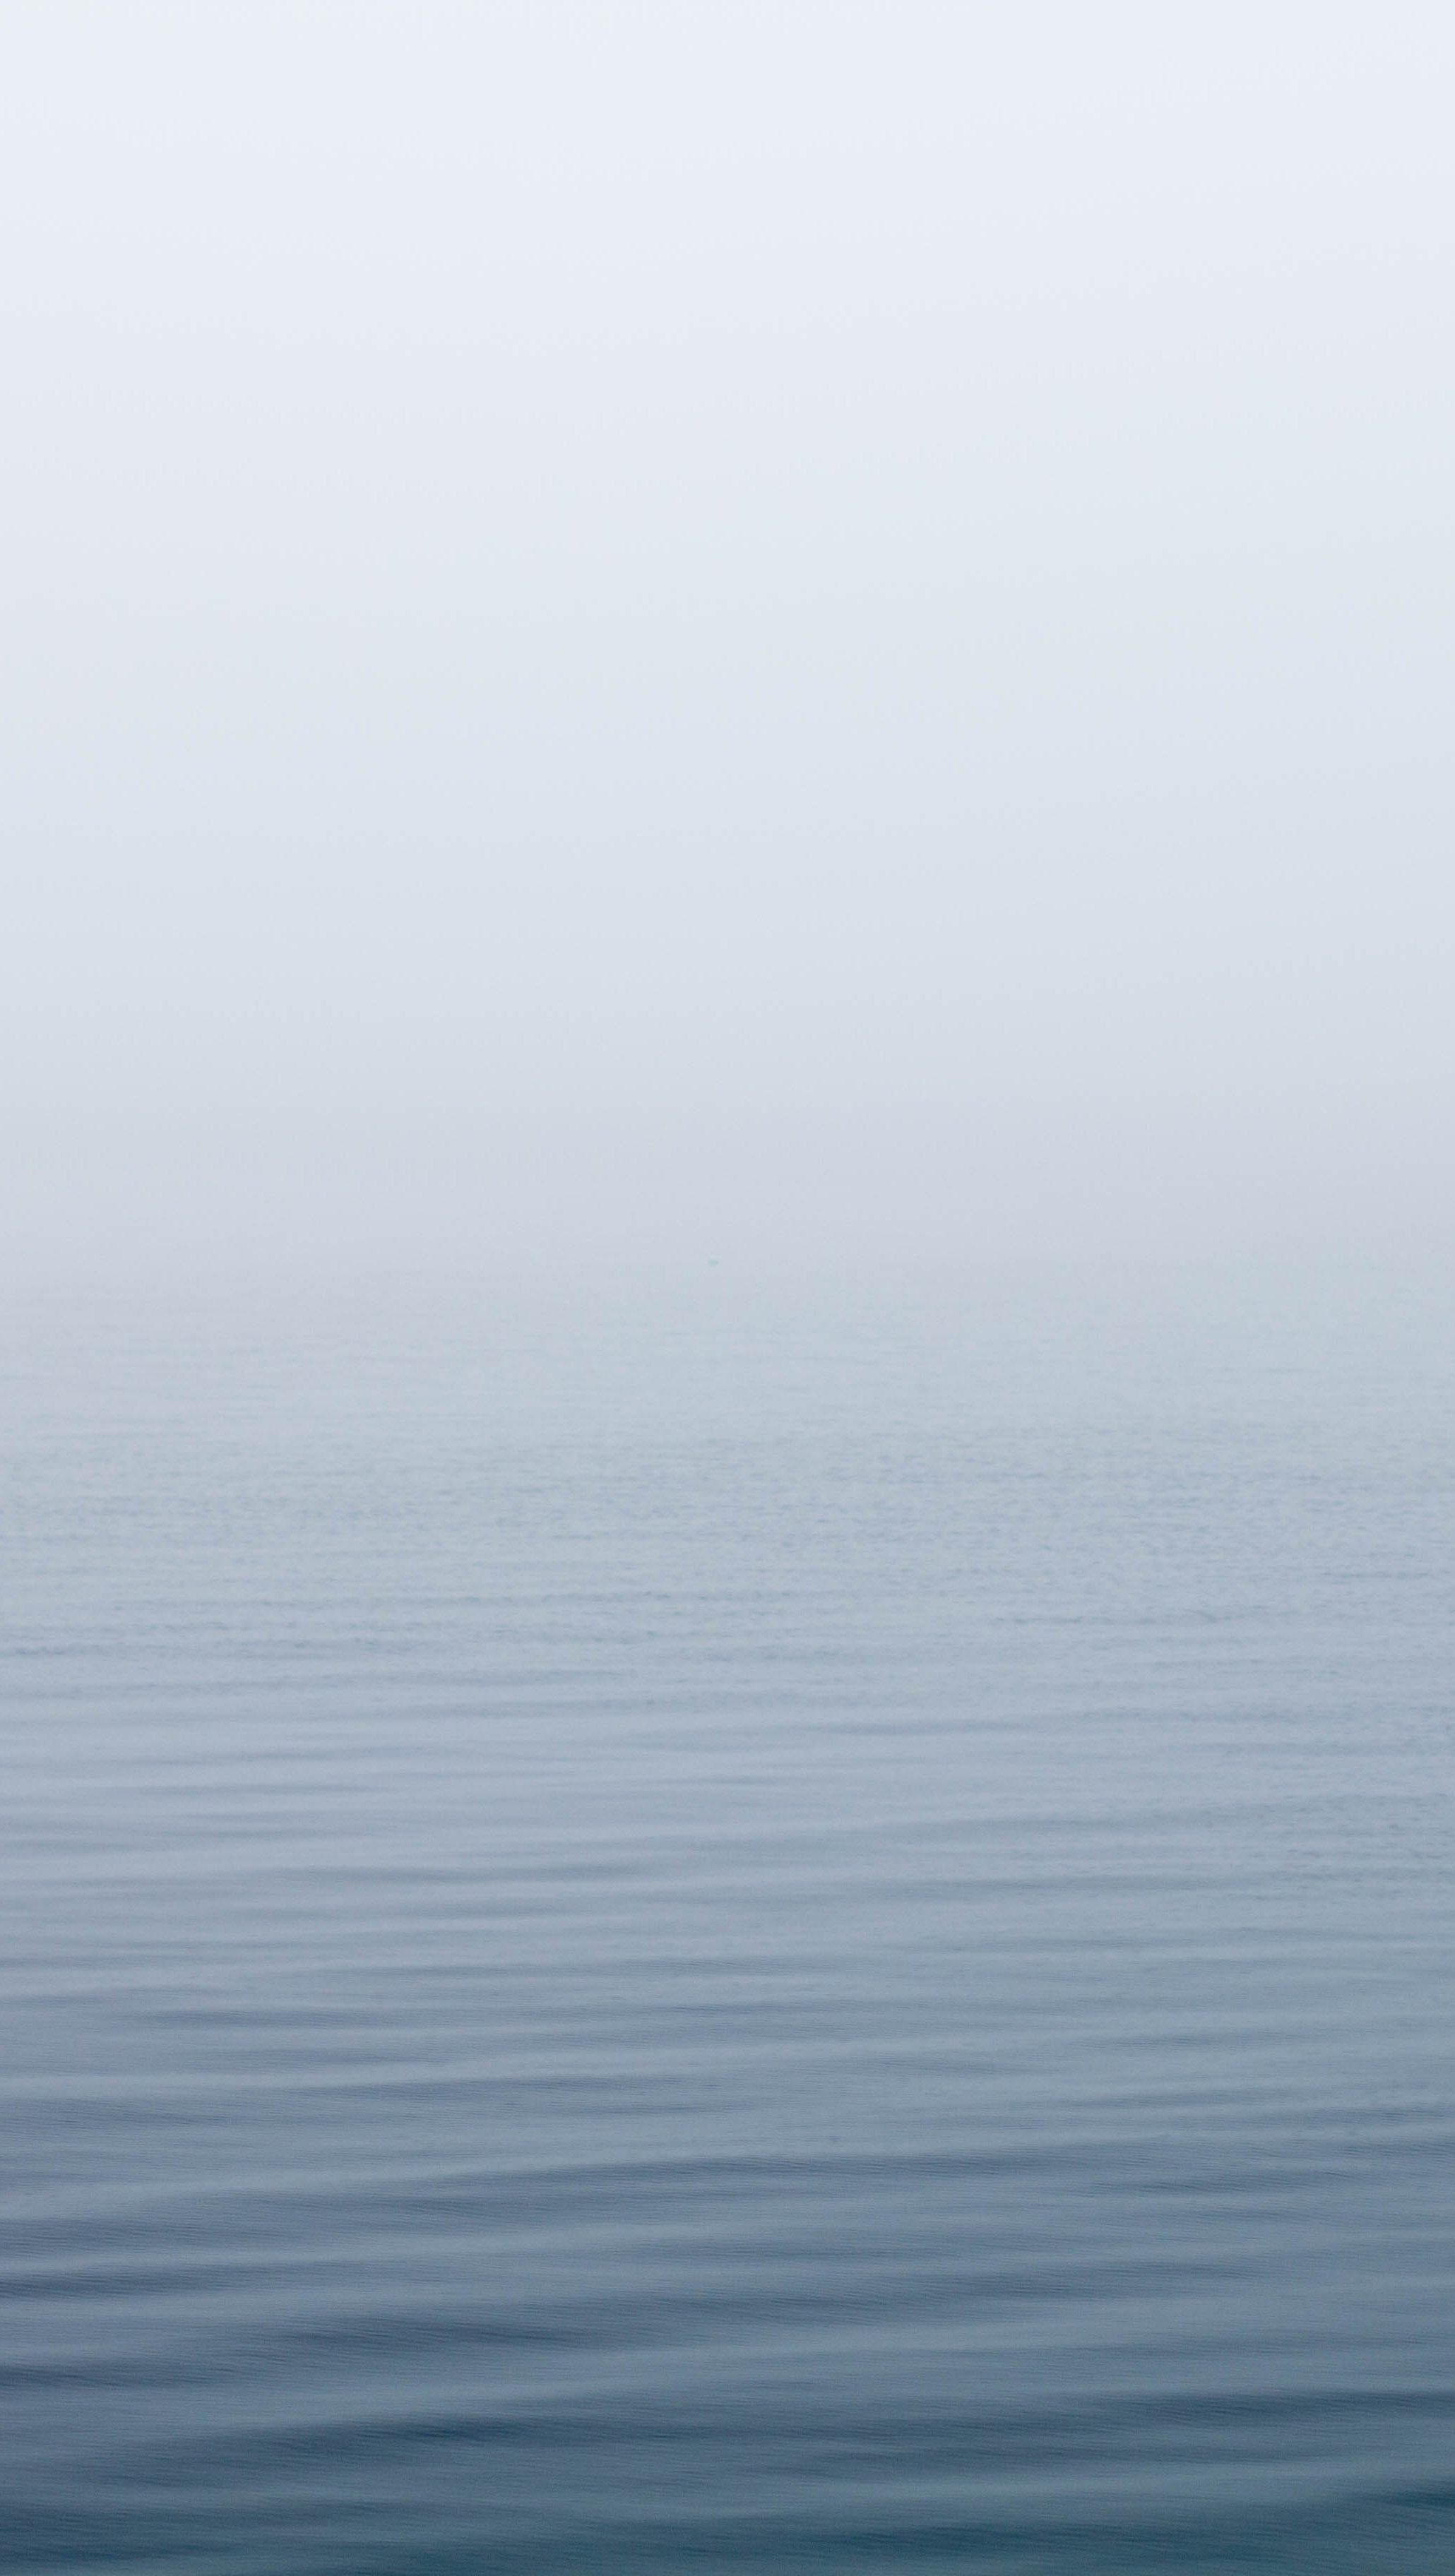 Mar bajo niebla Fondo de pantalla ID:3351